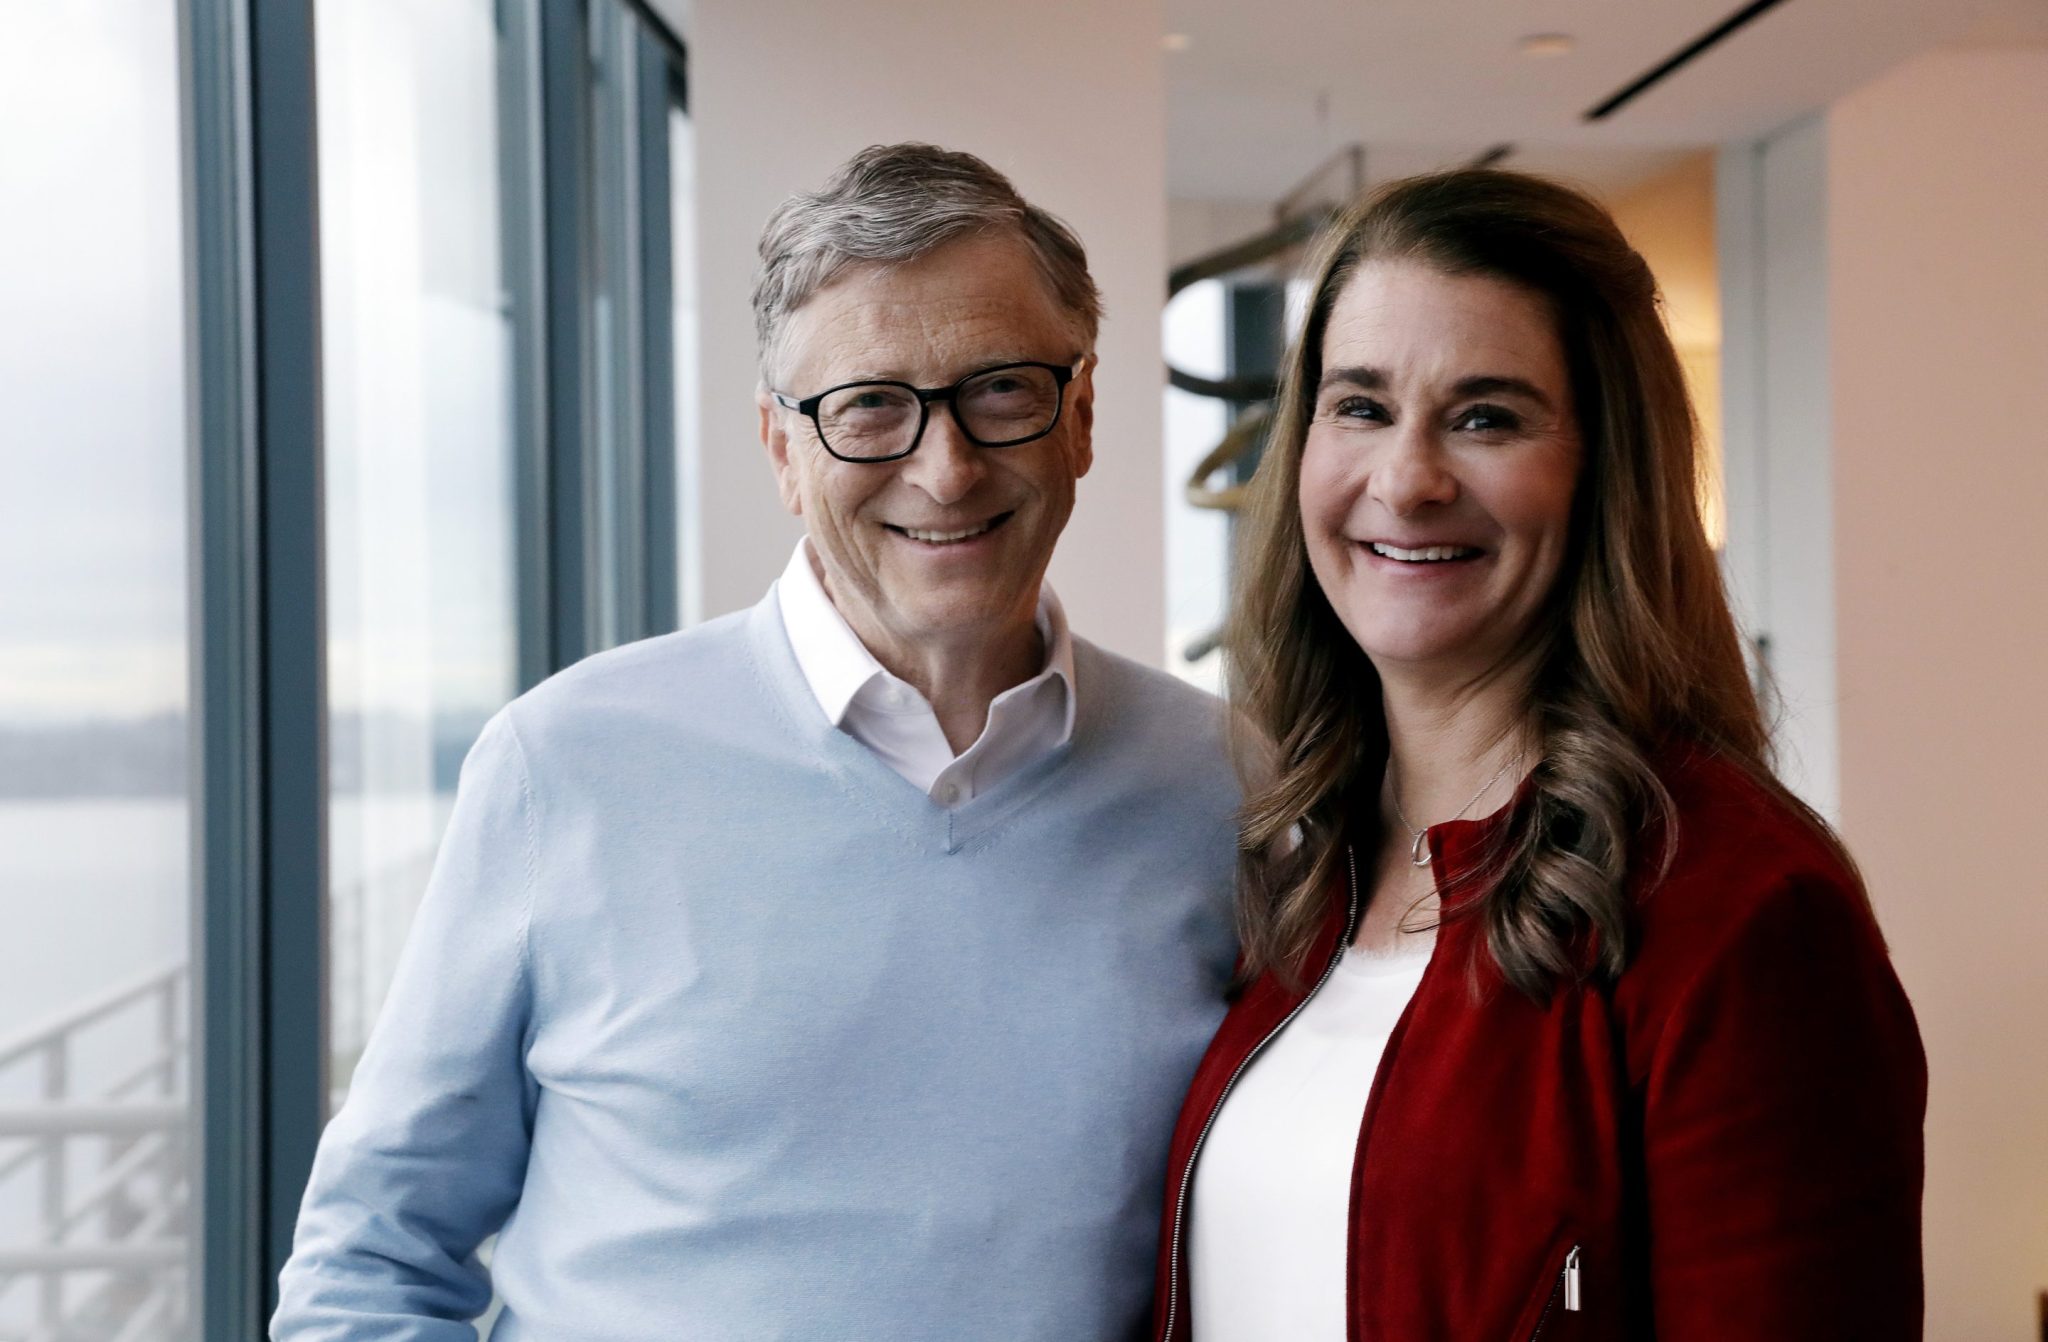 Bill & Melinda Gates Foundation donates $200 million to childbirth